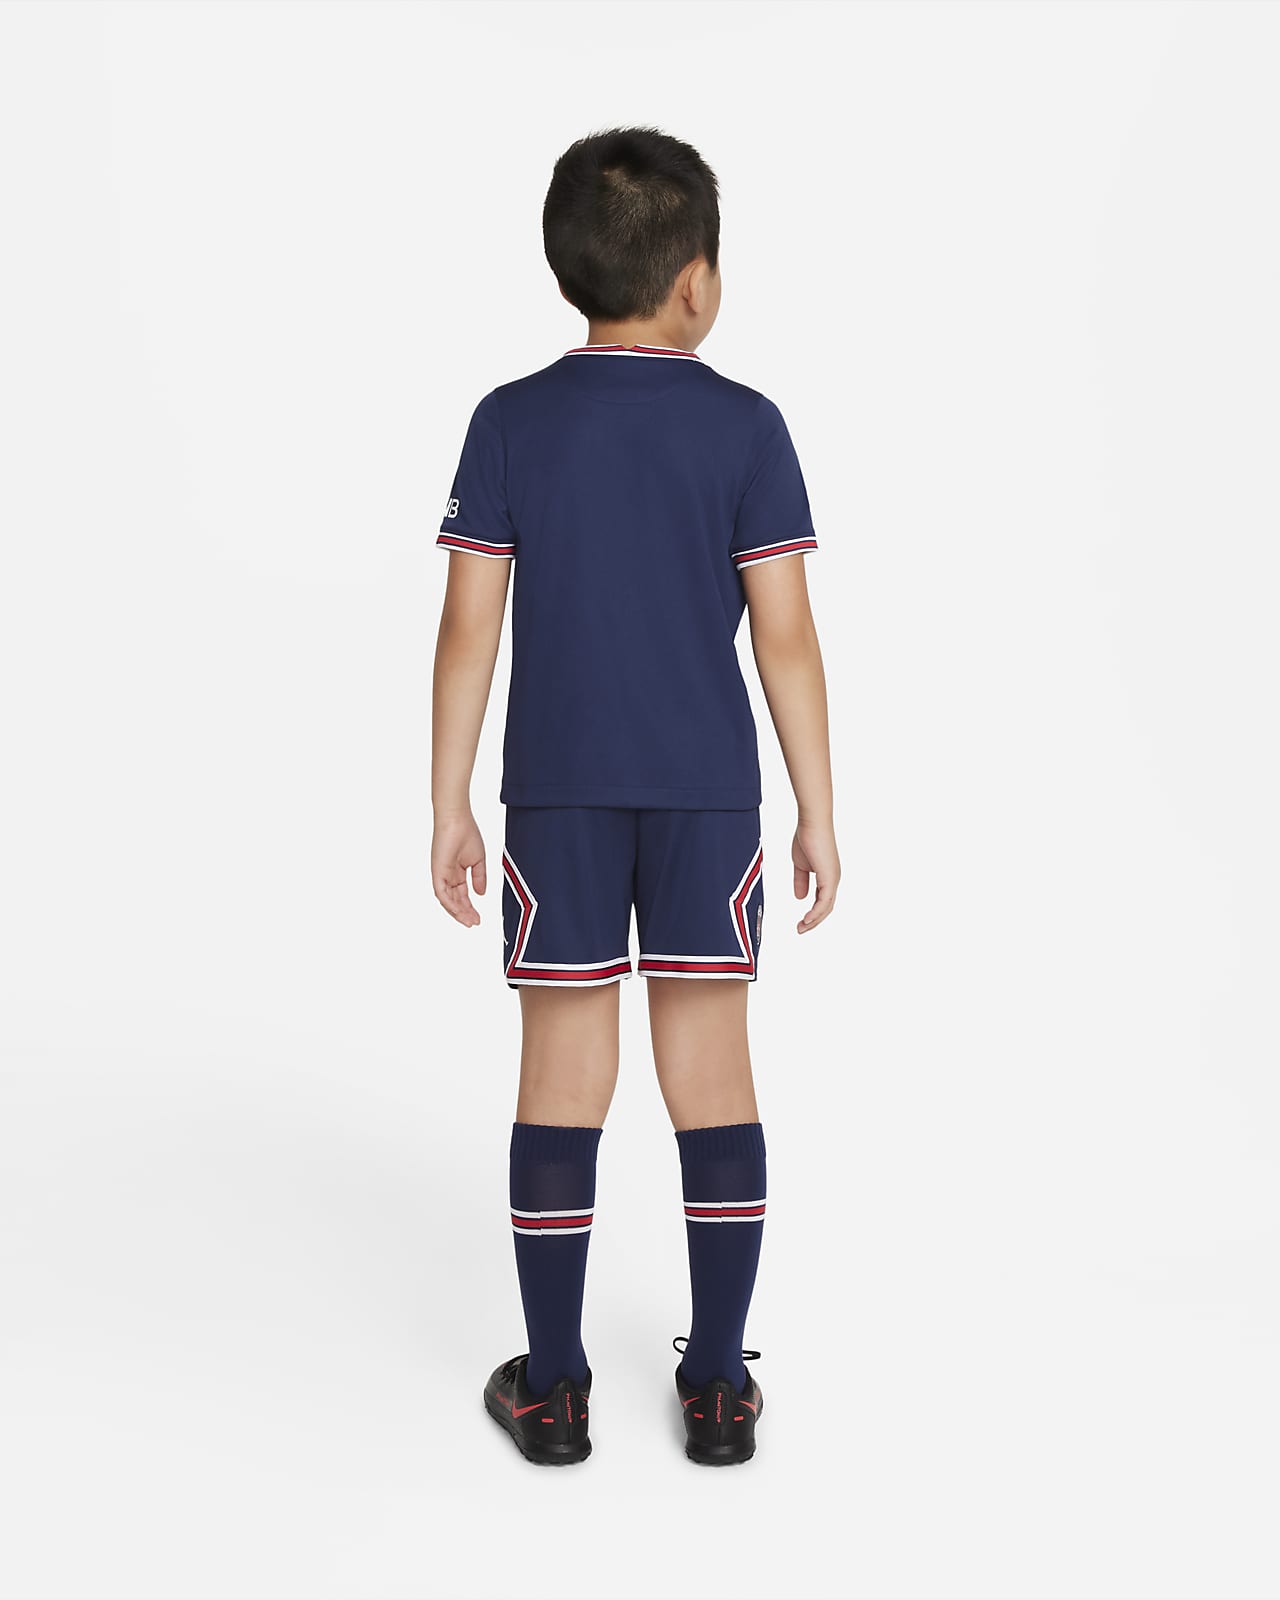 10-11 Years Old Socks Set Kit for Youth Size Large France Mbappe Home Blue 2021 Soccer Kids Jersey Shorts